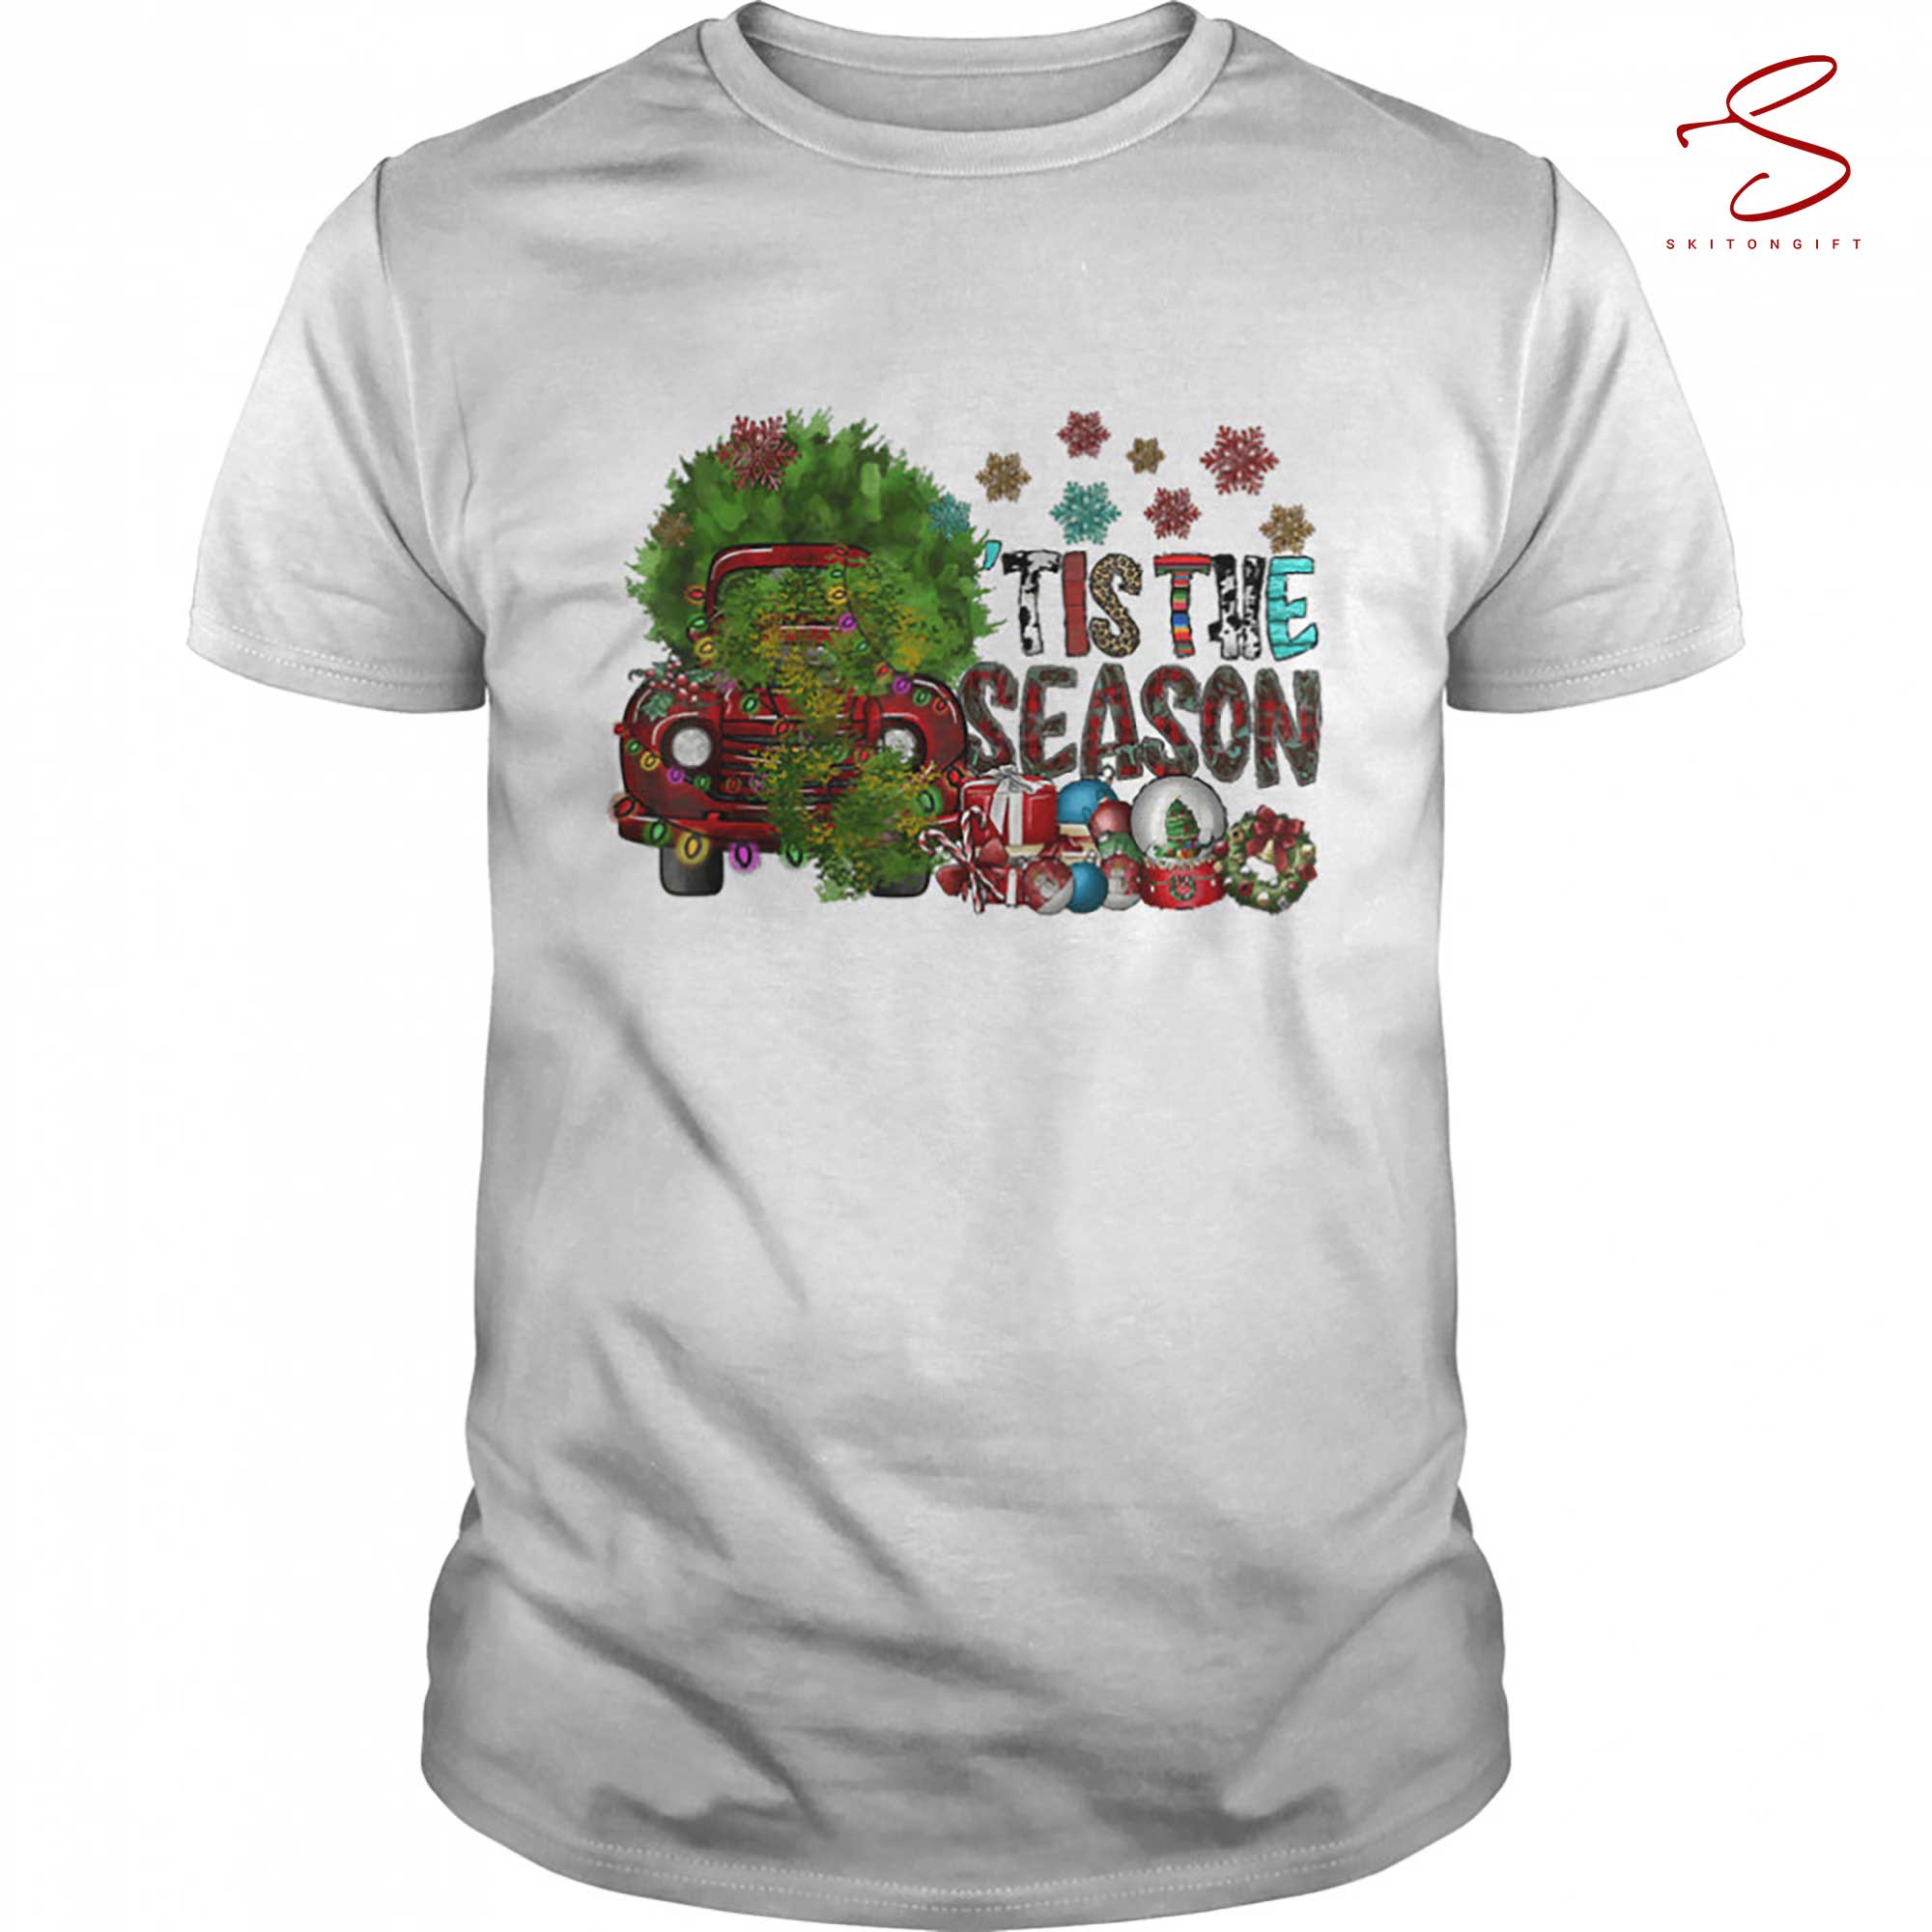 Skitongift Tis The Season Christmas Red Truck Merry Christmas Tree Tee T Shirt